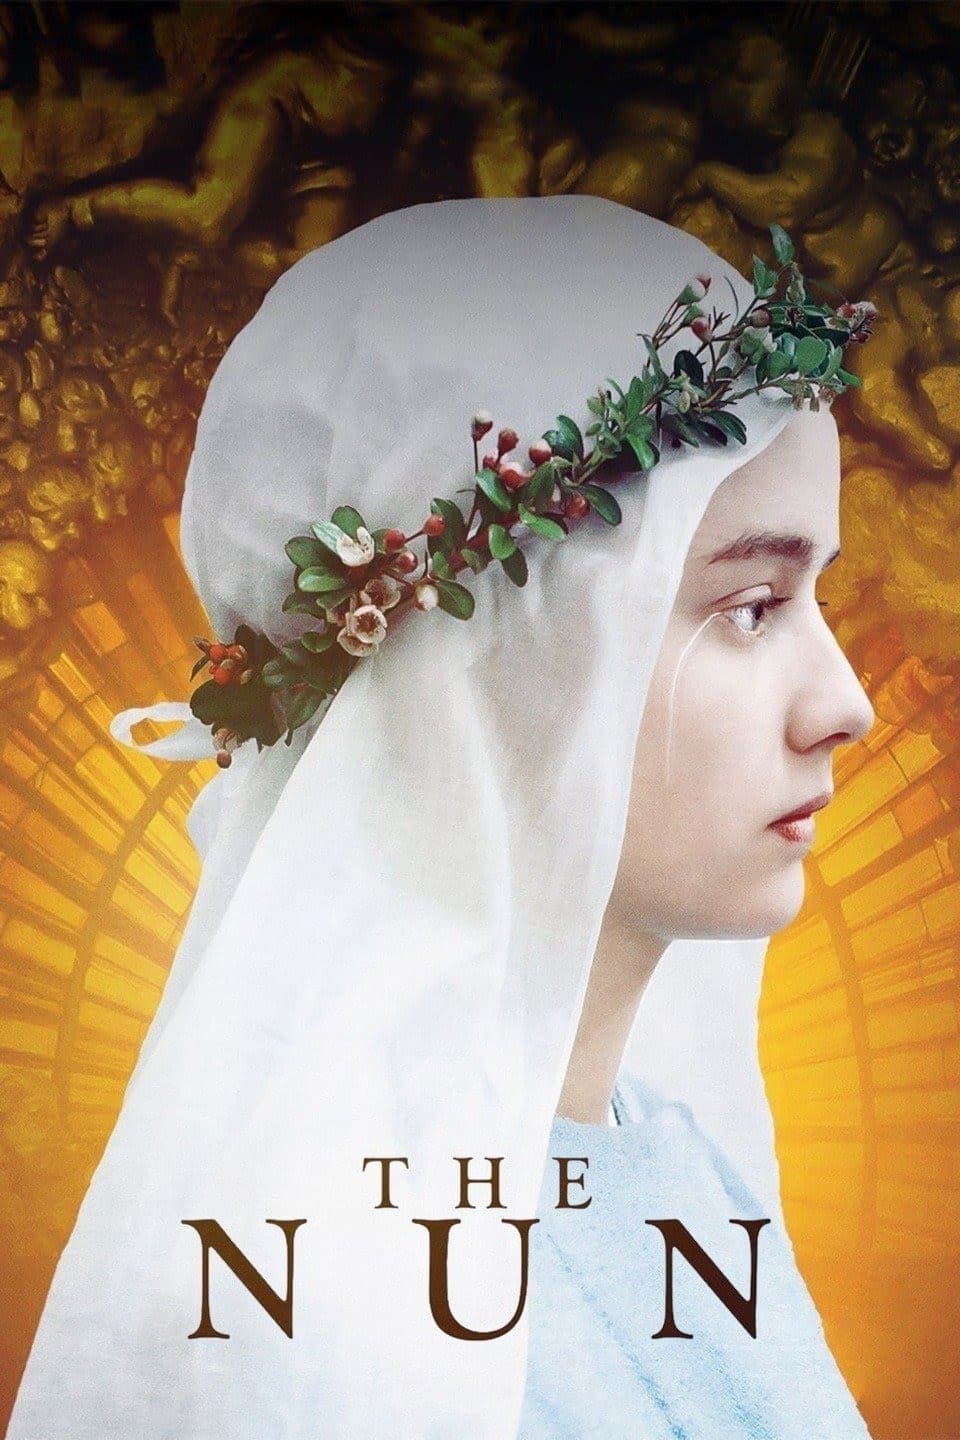 The Nun (2013)